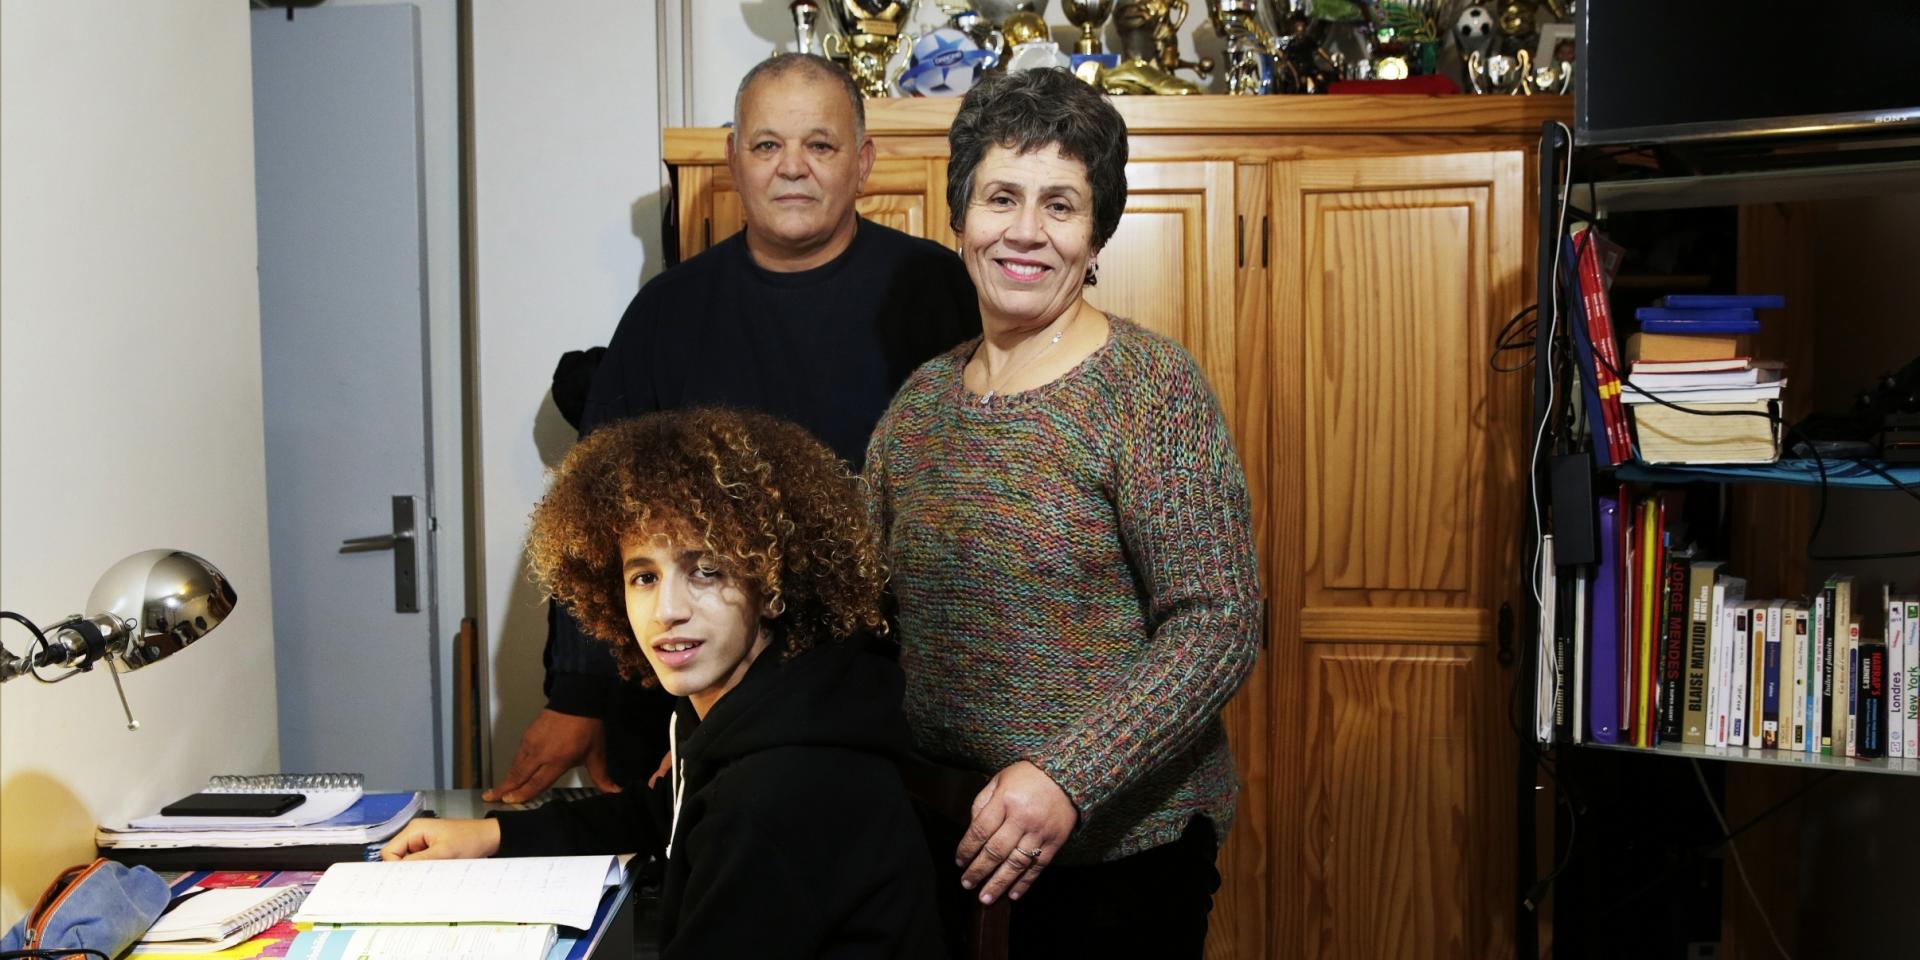 Hannibal Majbri with his parents